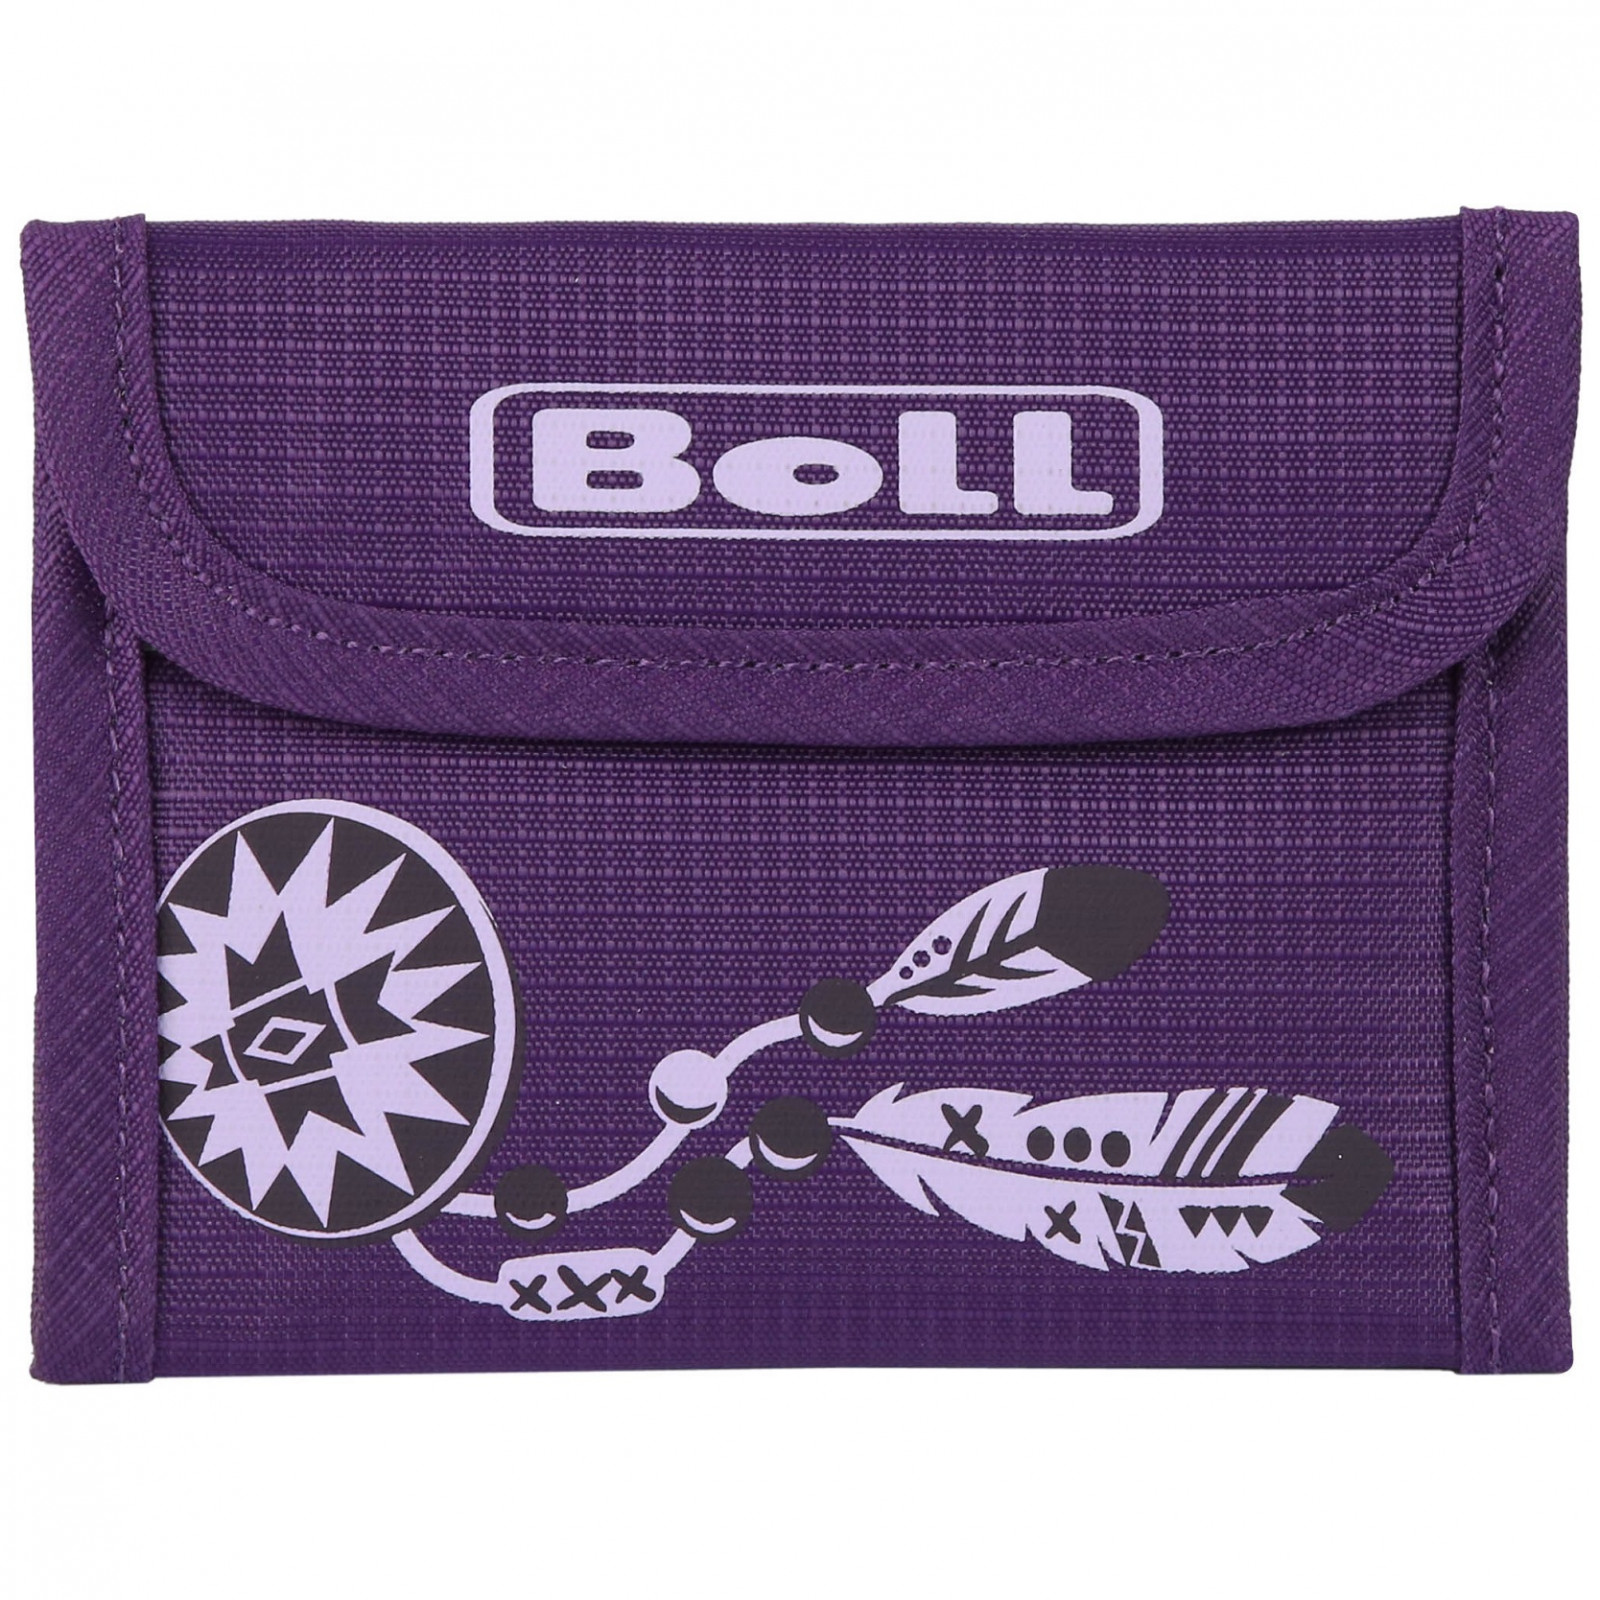 Peněženka Boll Kids Wallet Barva: fialová